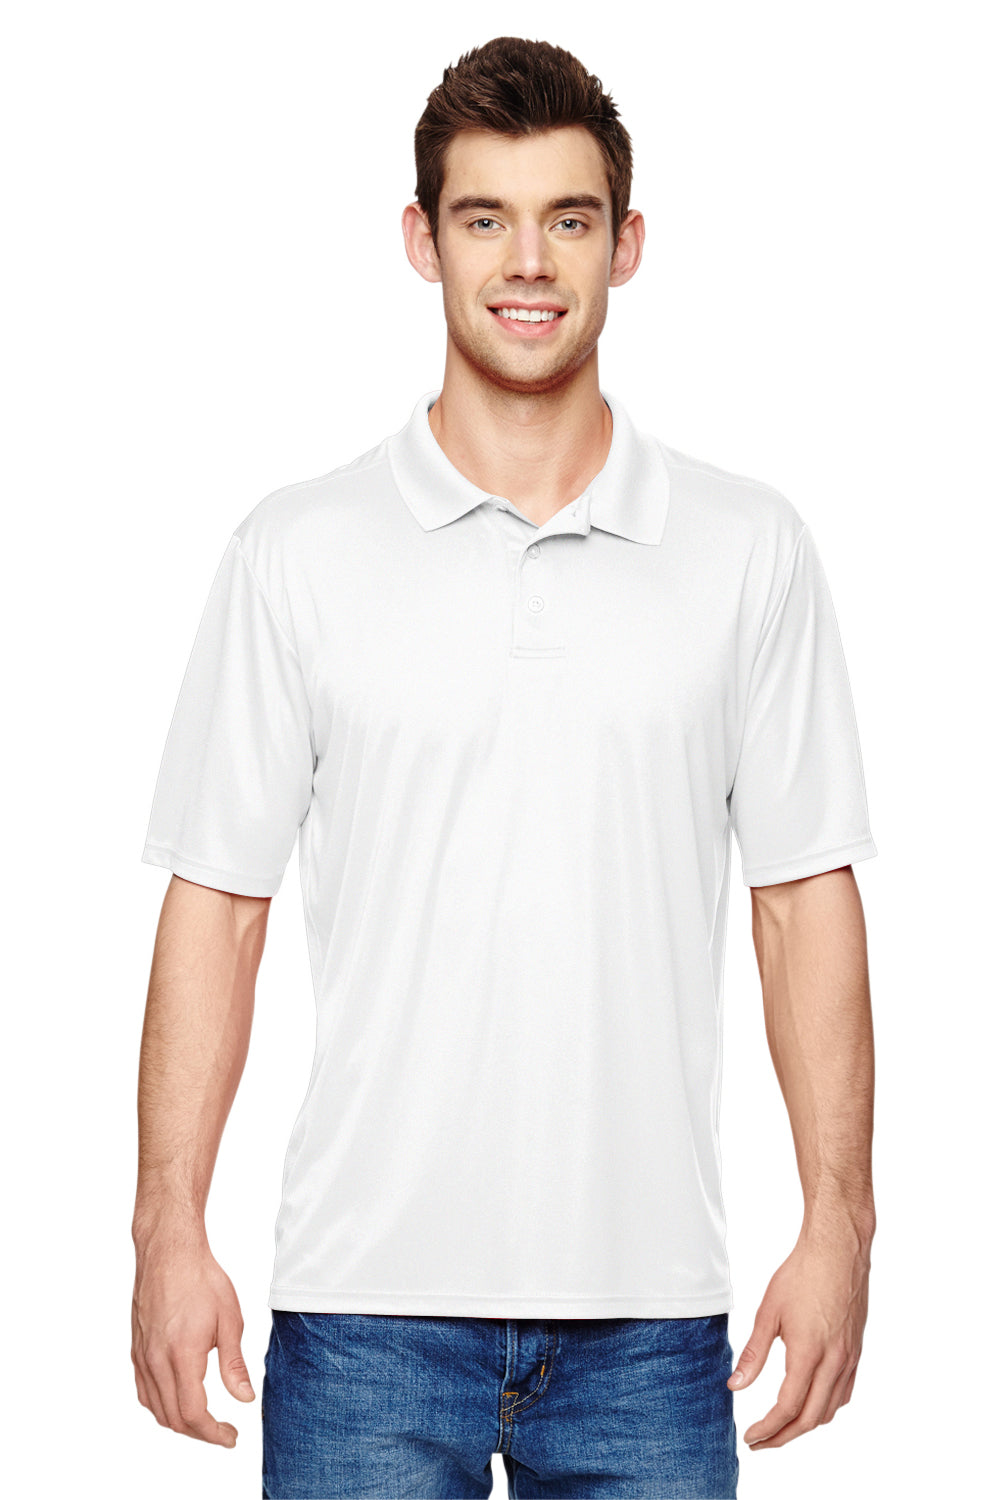 Hanes 4800 Mens Cool Dri Fresh IQ Moisture Wicking Short Sleeve Polo Shirt White Front